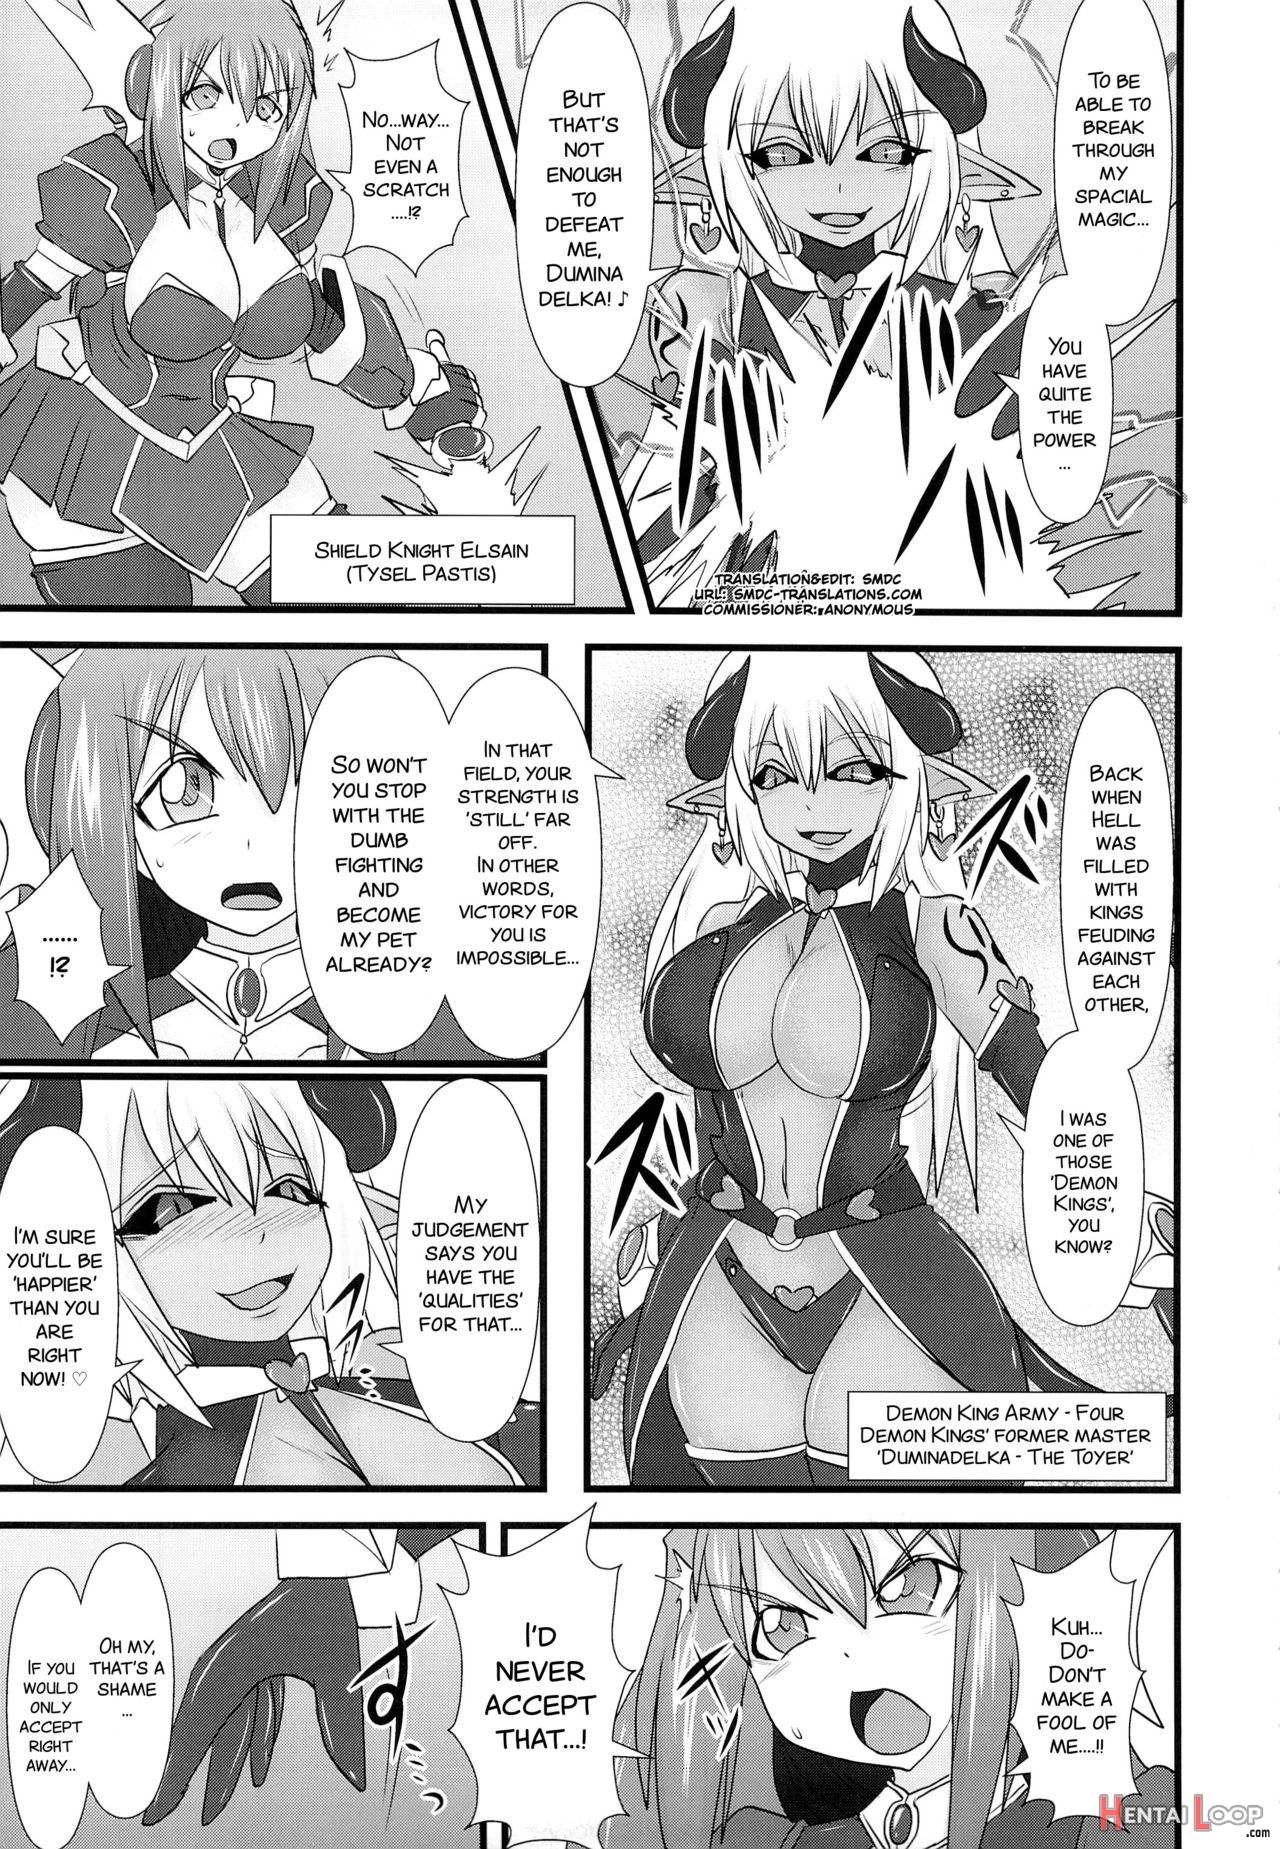 Shield Knight Elsain Vol. 13 "succubus Flirtation" page 5